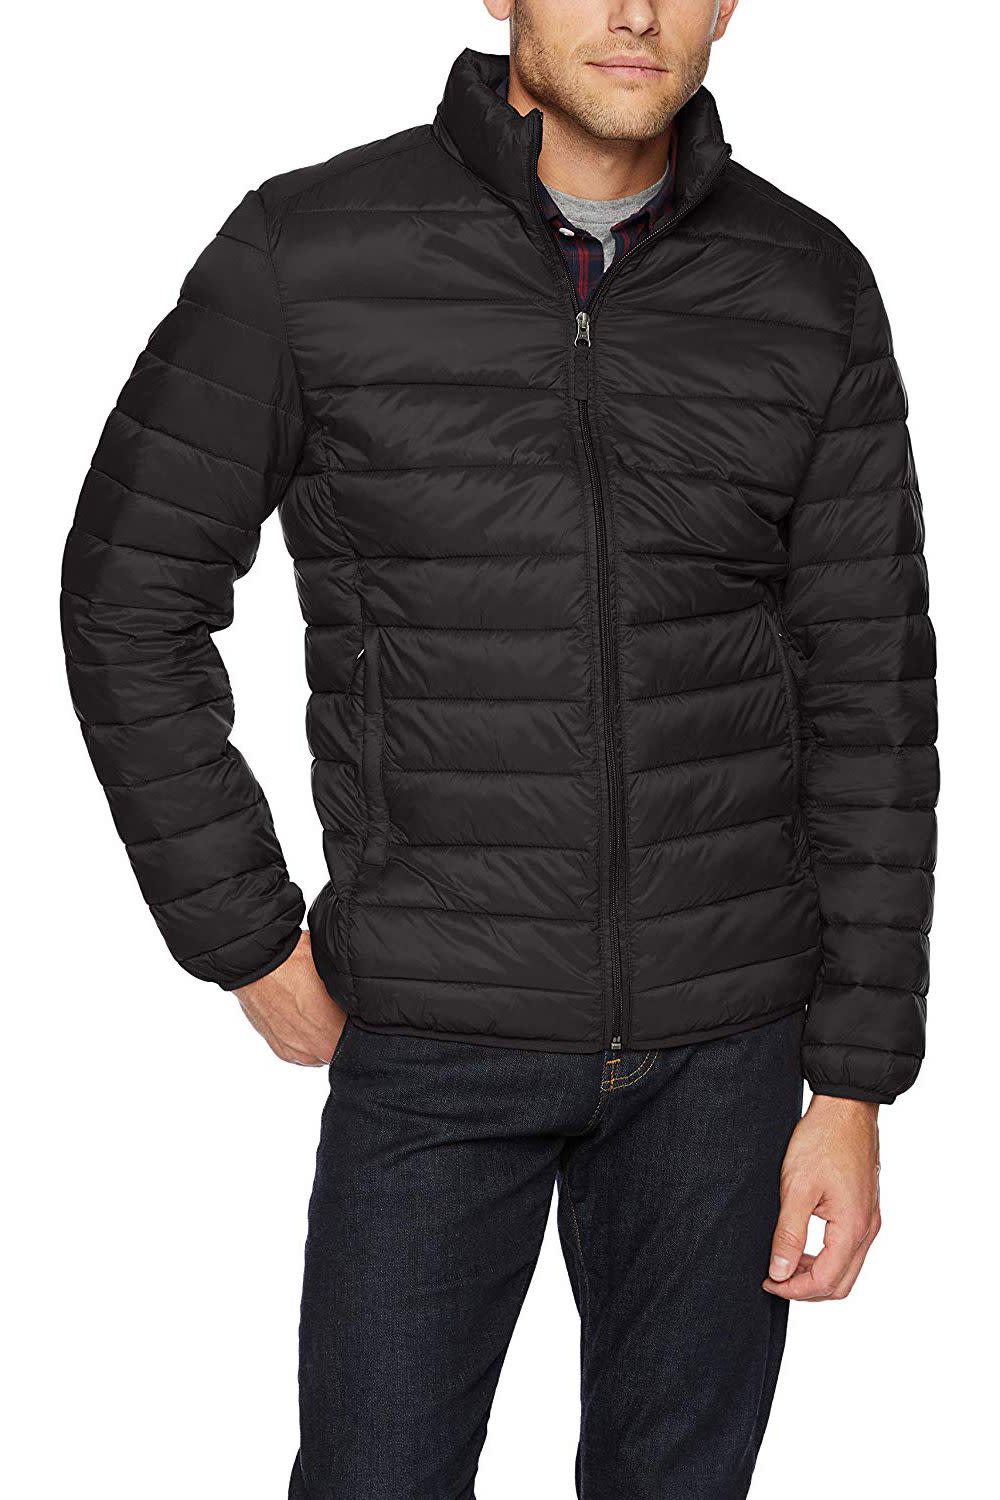 Amazon Essentials Men's Lightweight Packable Puffer Jacket